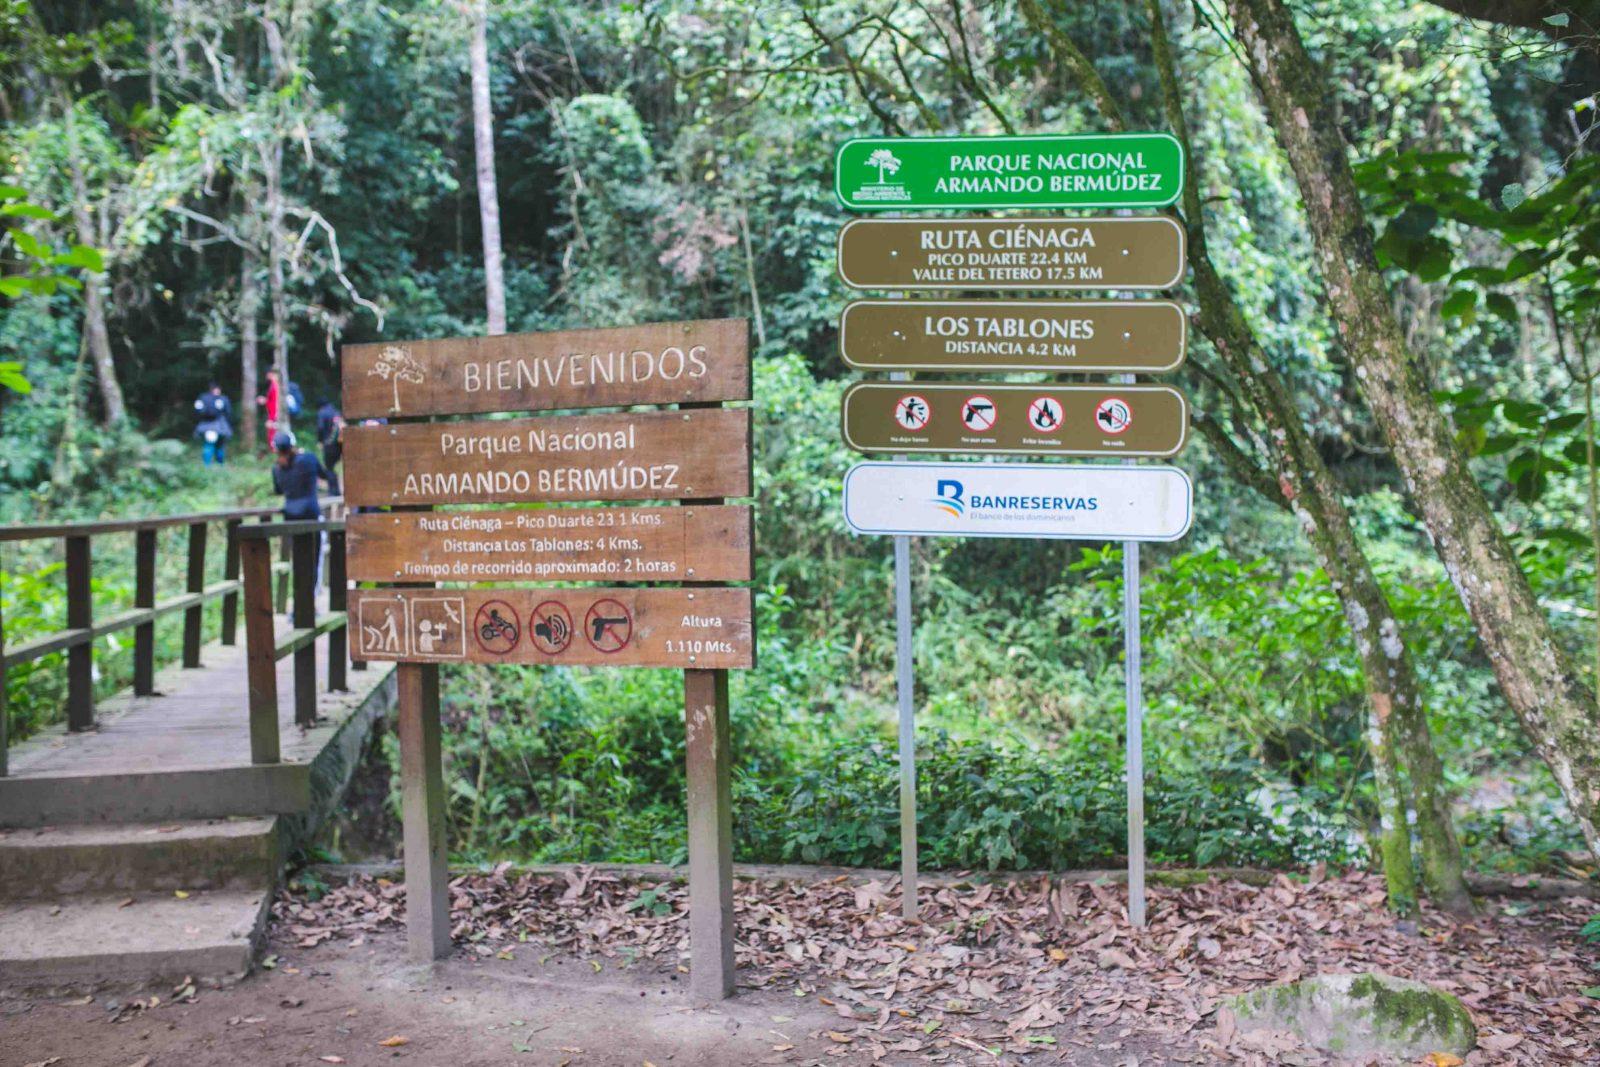 The entrance of Parque Nacional Armando Bermudez.